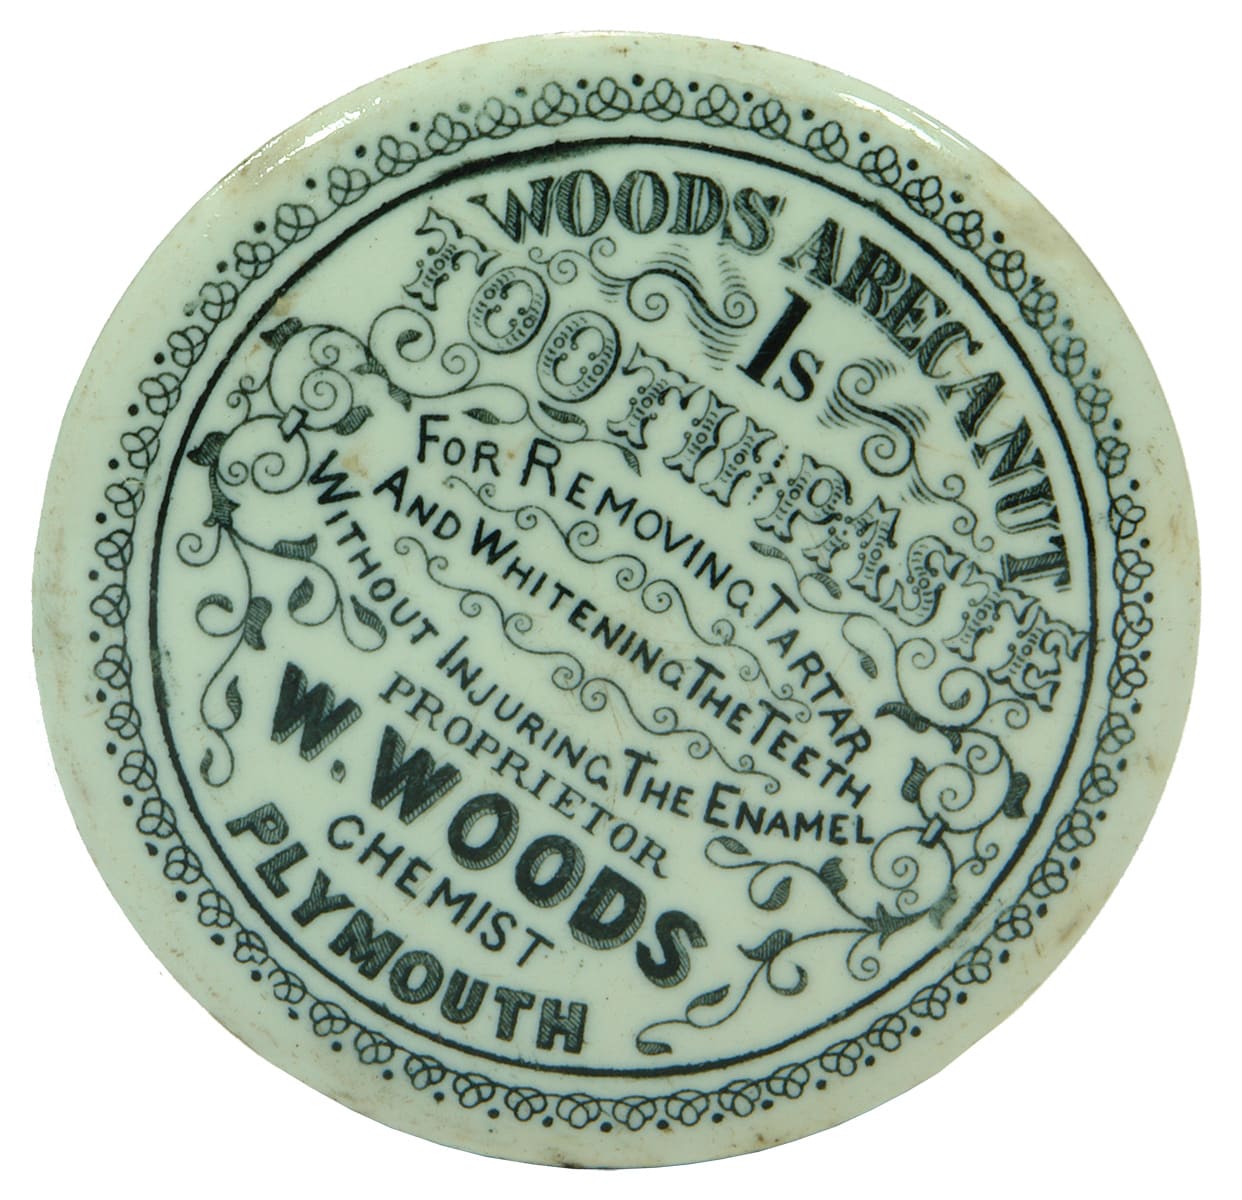 Woods Areca Nut Tooth Paste Pot Lid